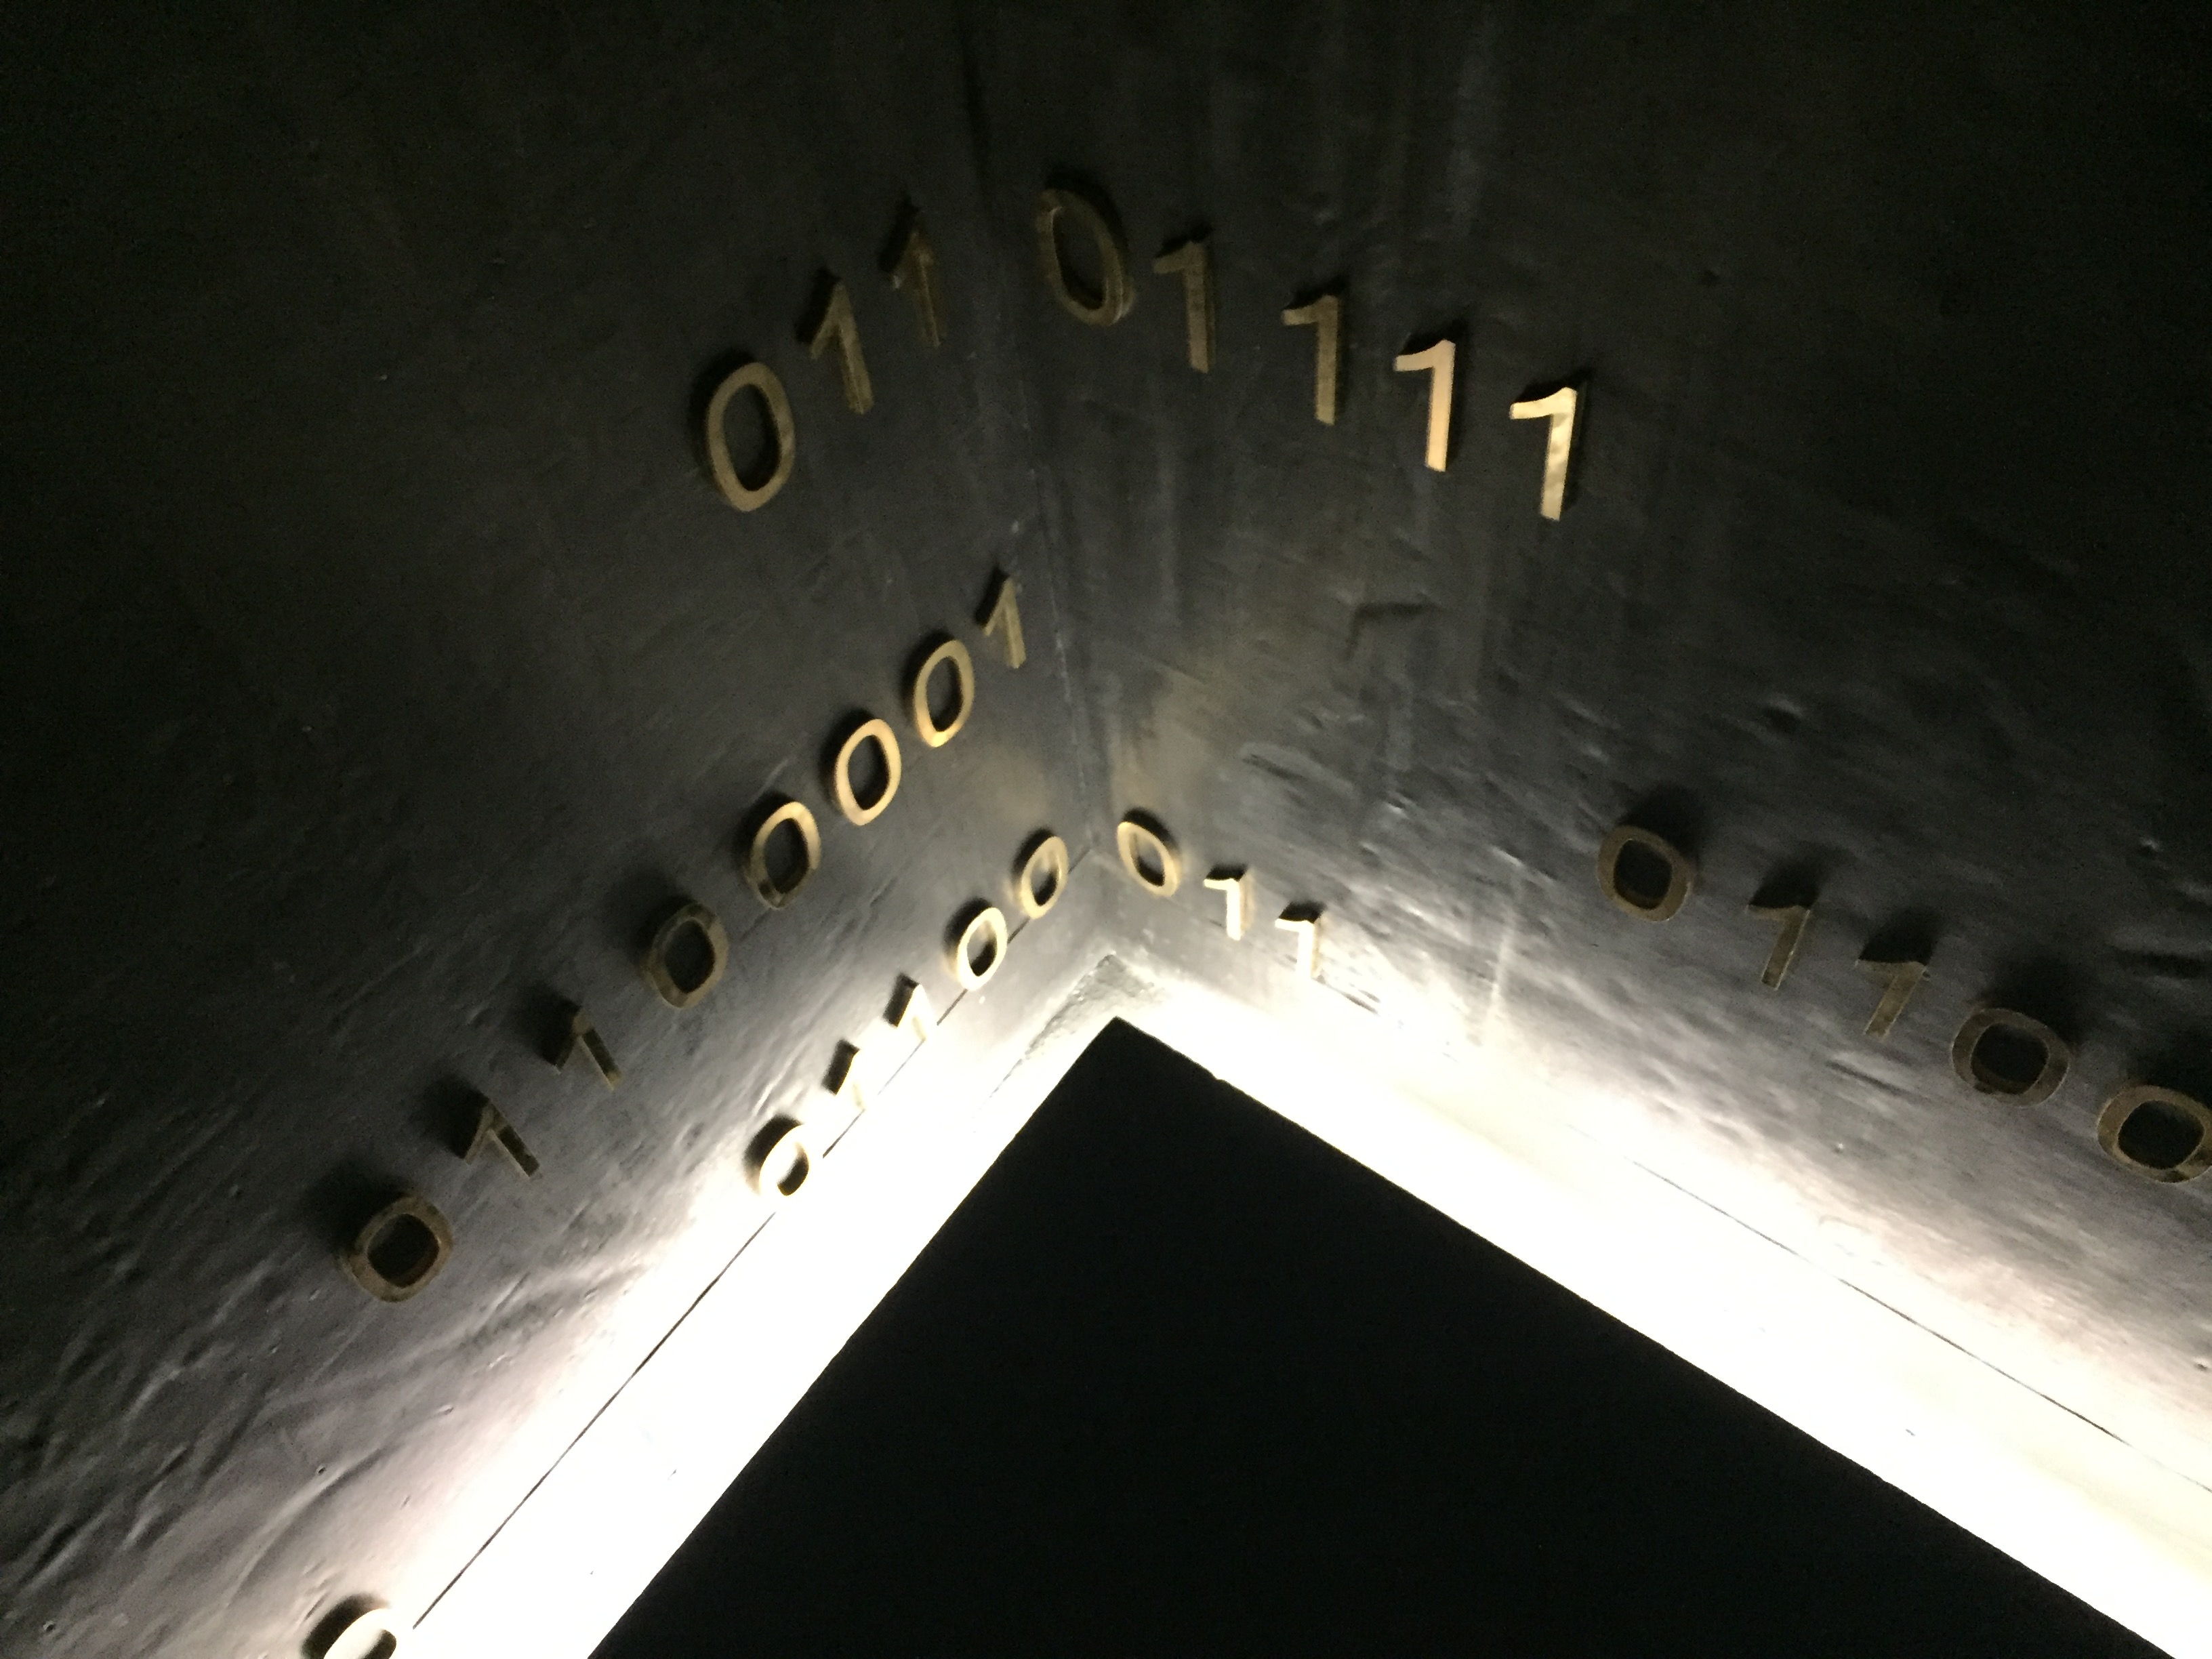 A dark corner, lit from below to reveal artistic strings of binary code